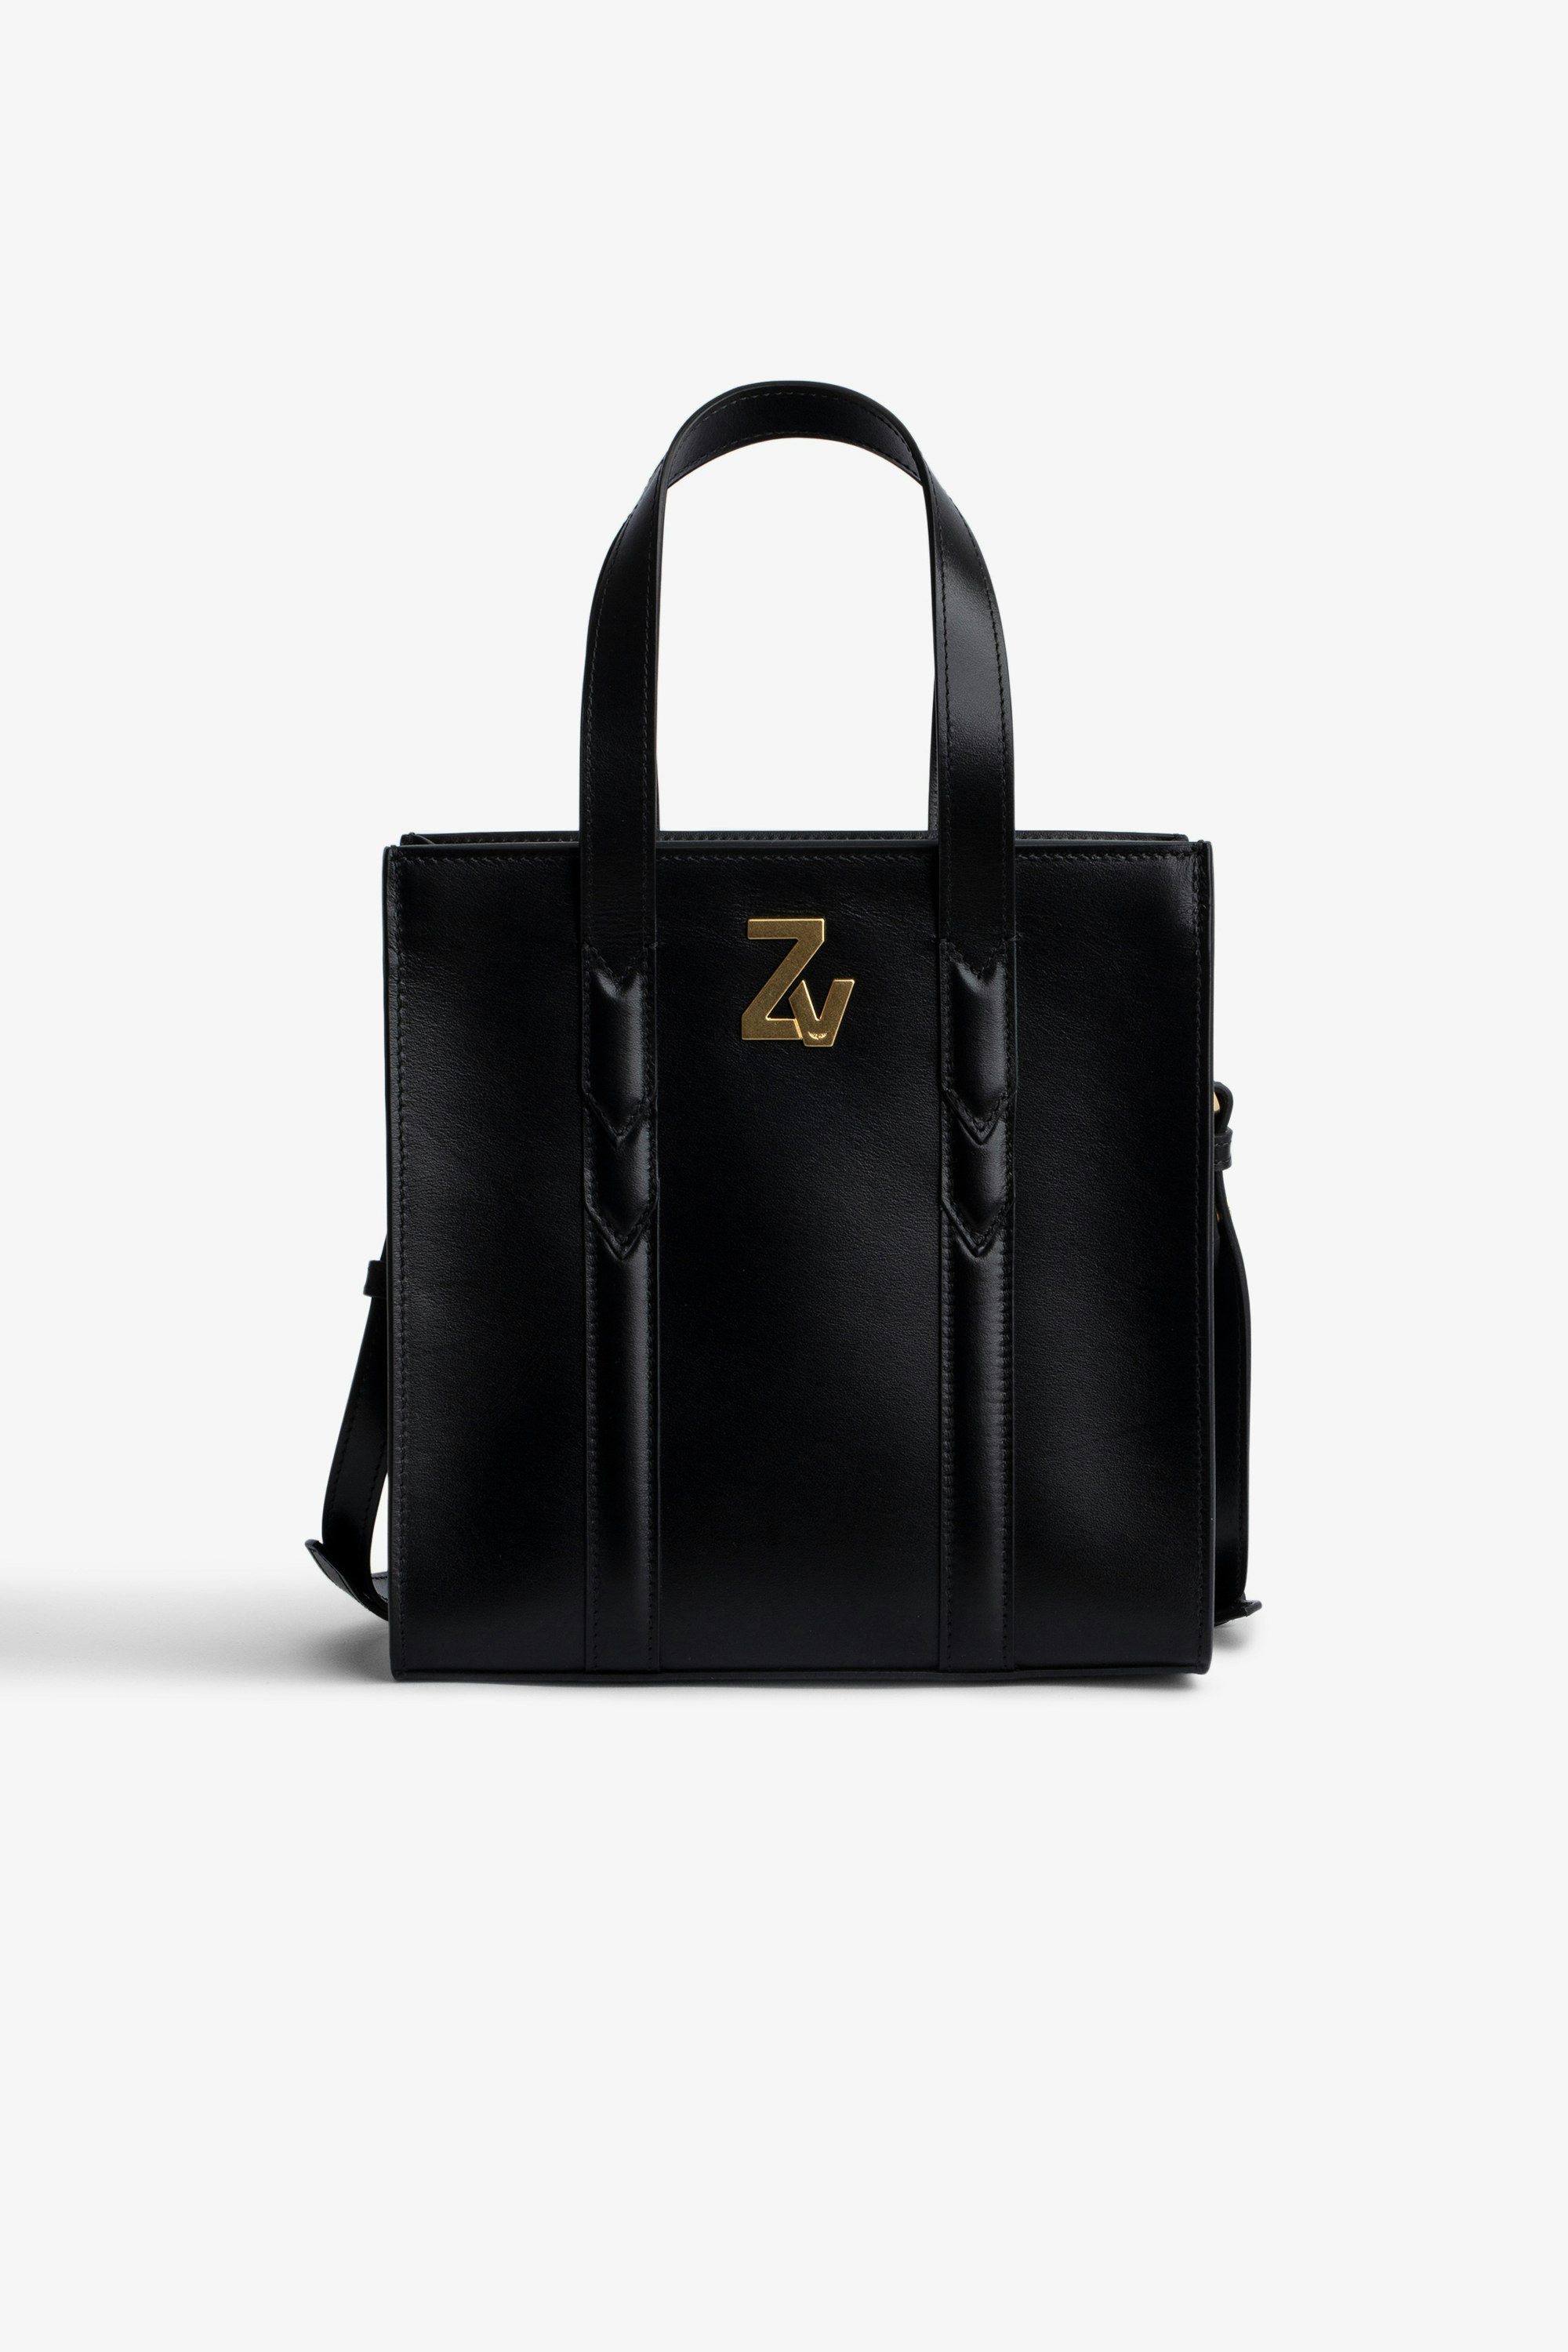 ZV Initiale Le Small Tote Bag Women’s black ZV Initiale Le Small Tote bag